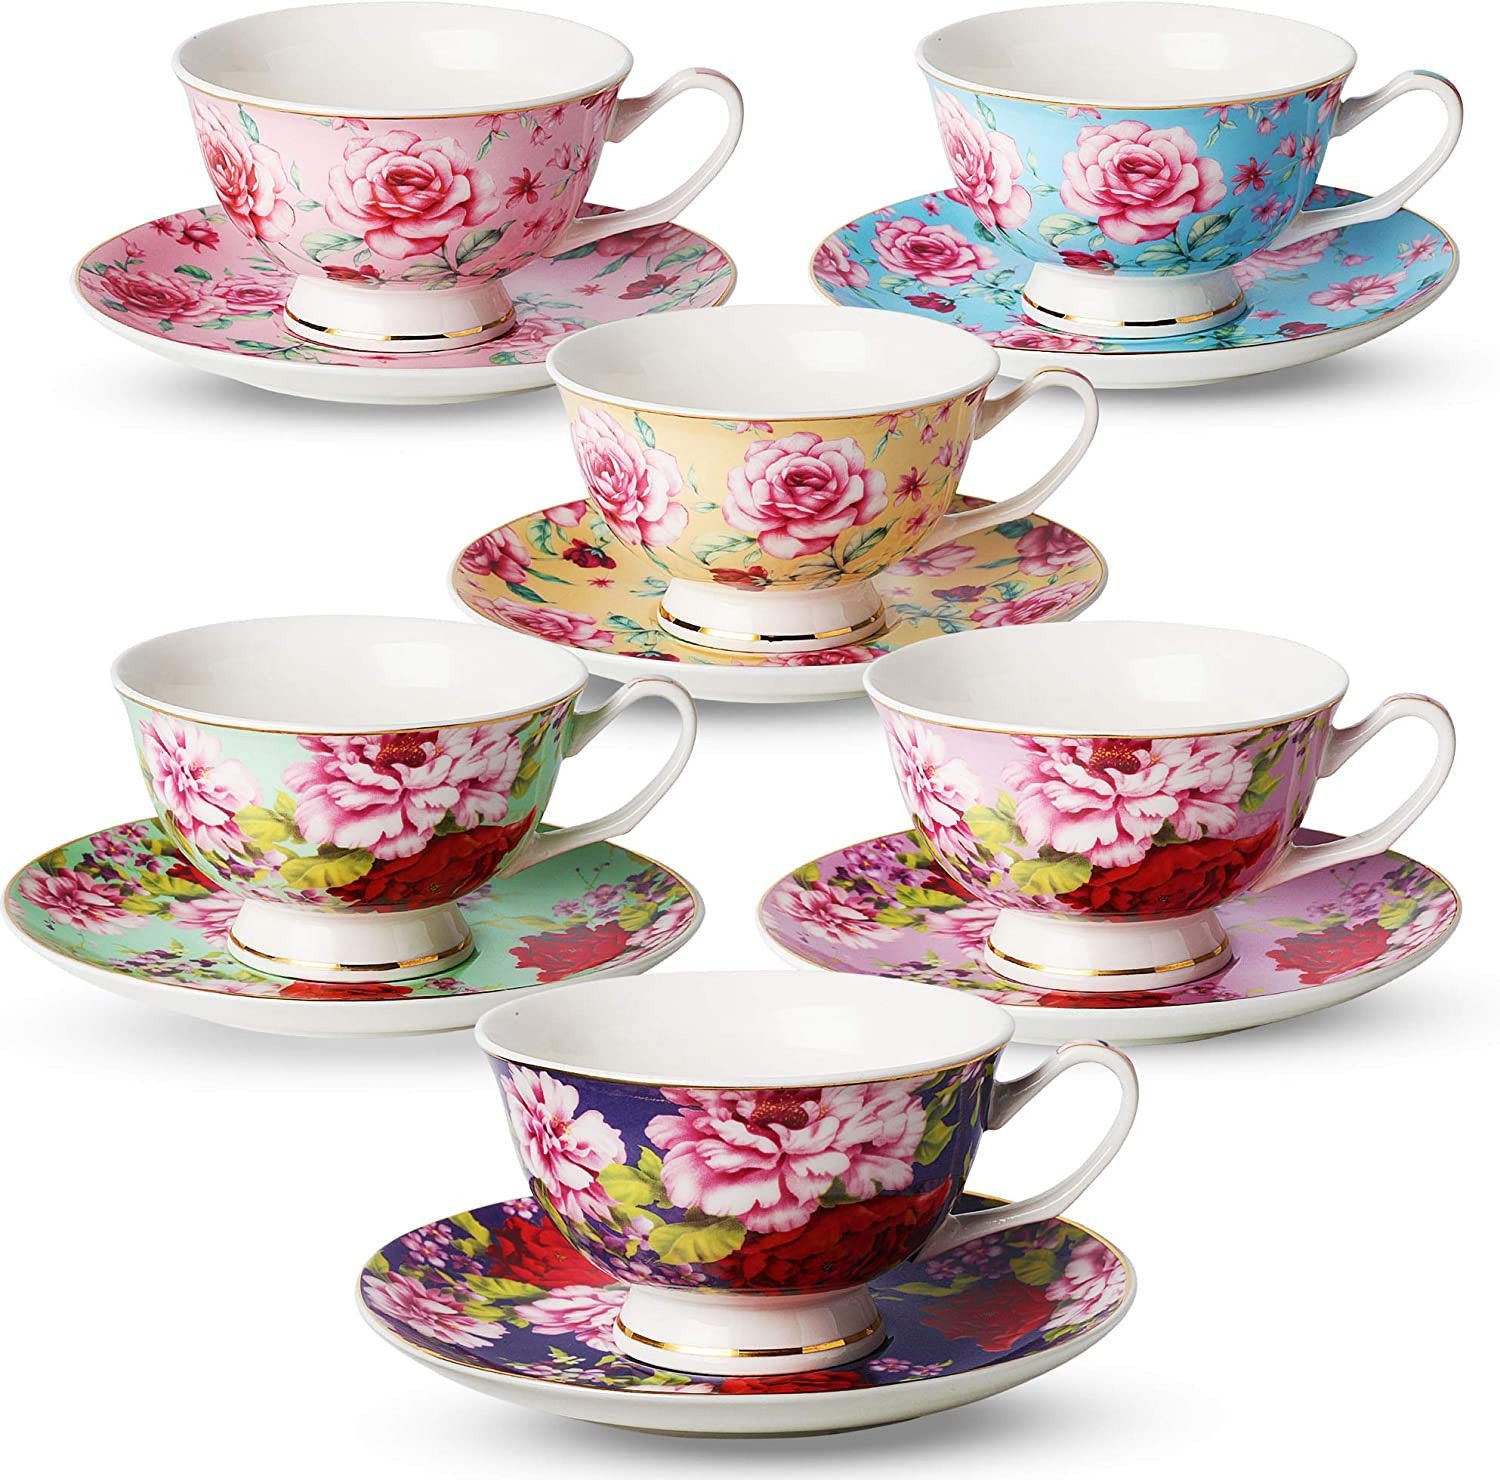 Tea Cups and Saucers Set of 6, Tea Set, Floral Tea Cups (8oz)